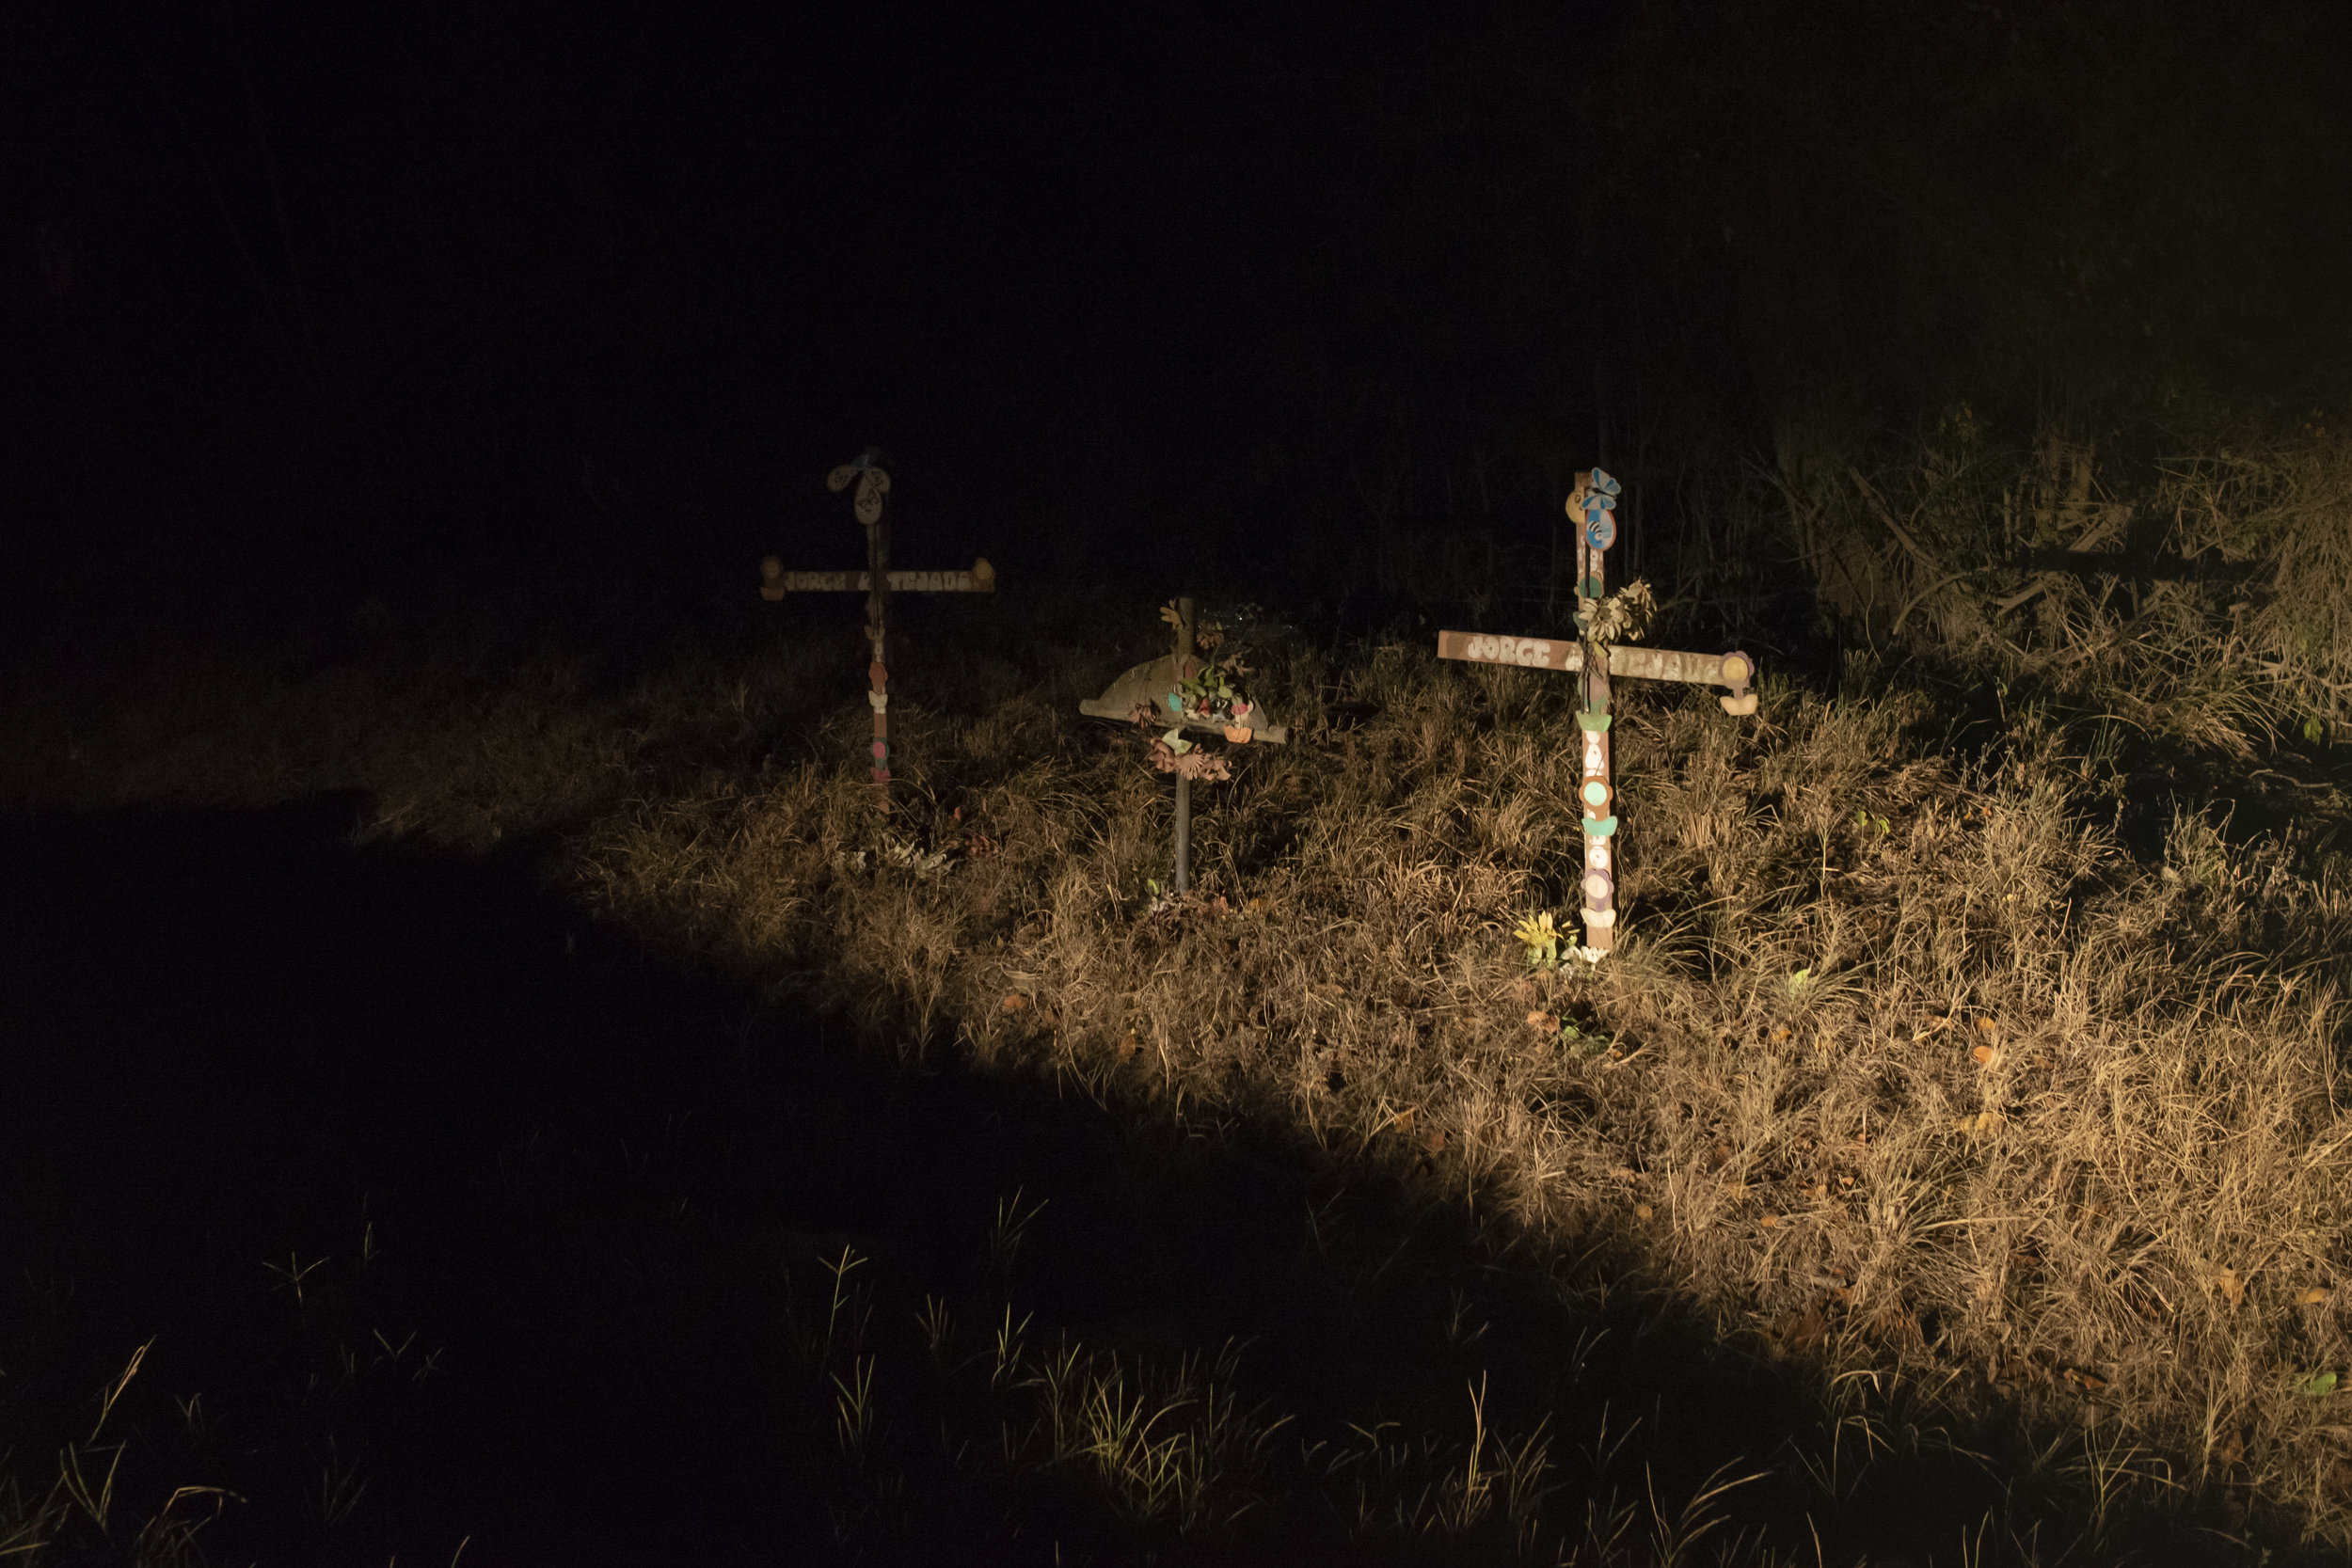  Crosses in a ditch marking the location where three dead bodies were found. San Pedro Sula, Honduras. 